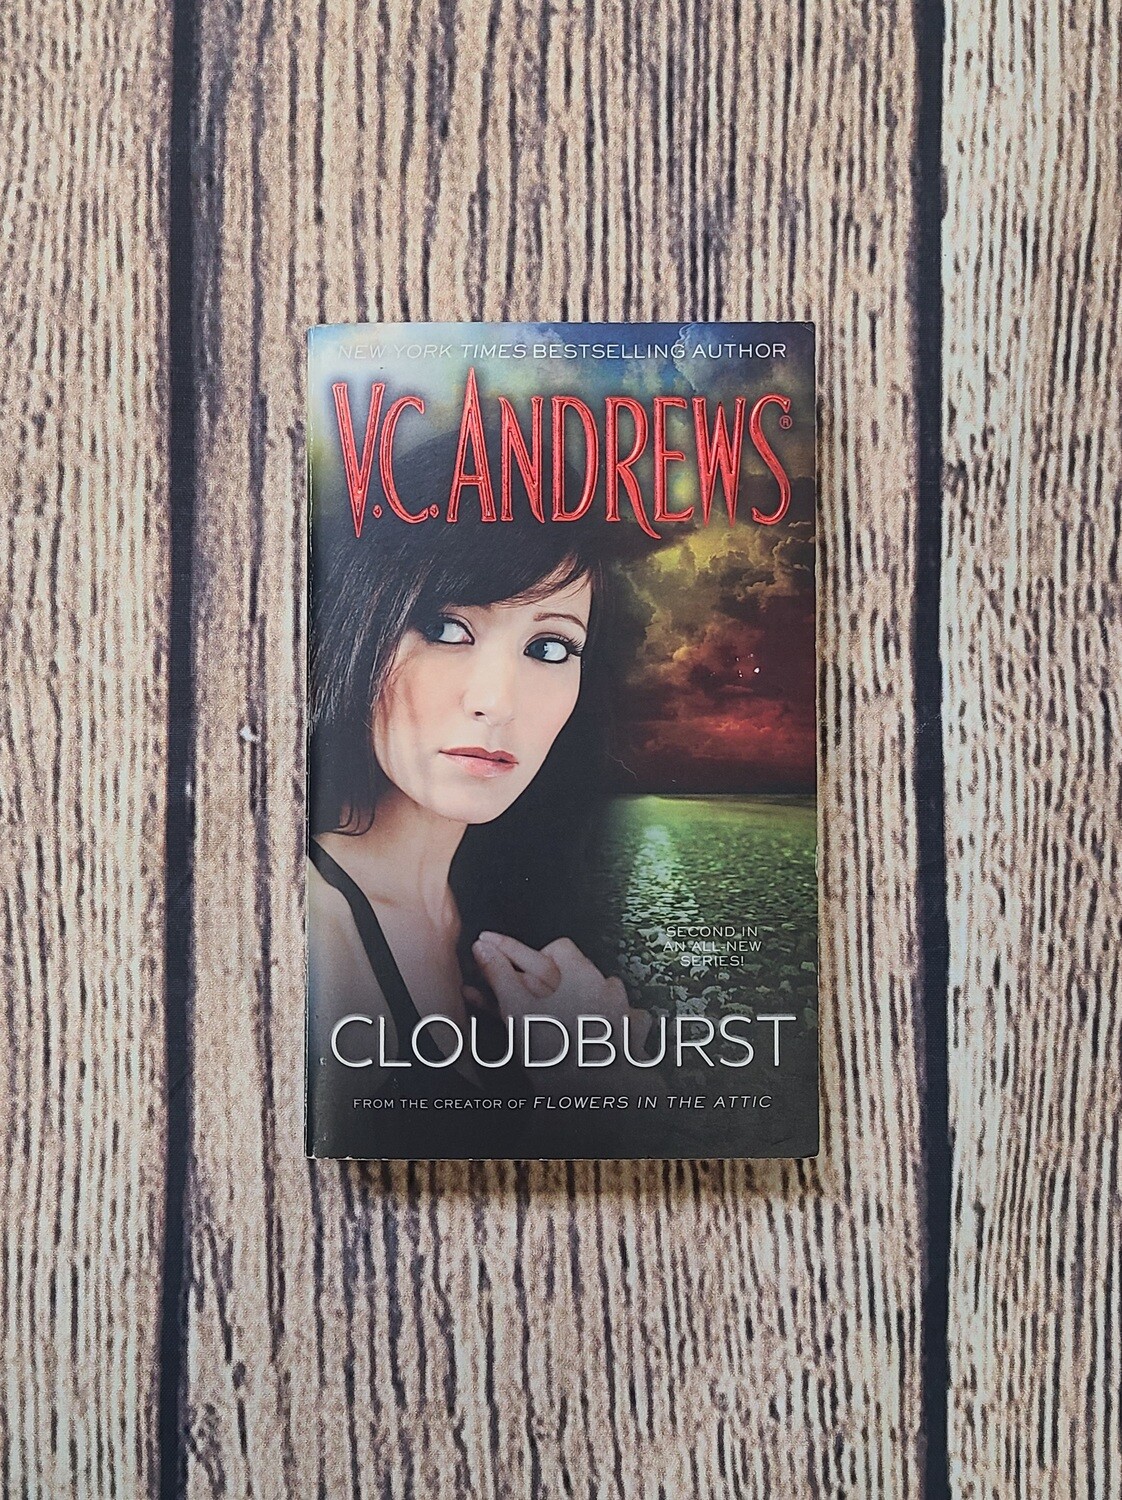 Cloudburst by V.C. Andrews